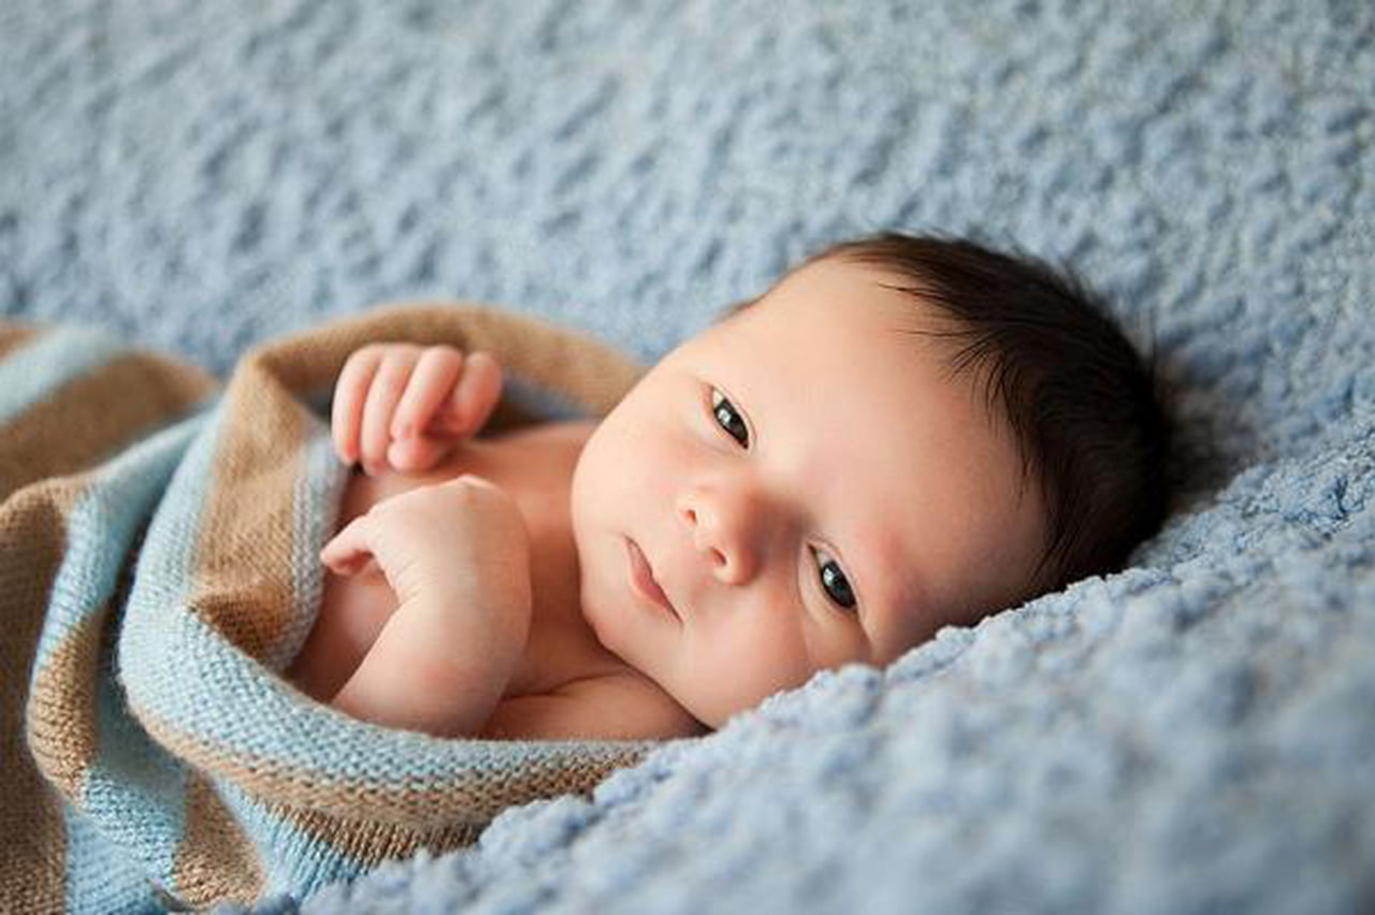 Top tips for newborns